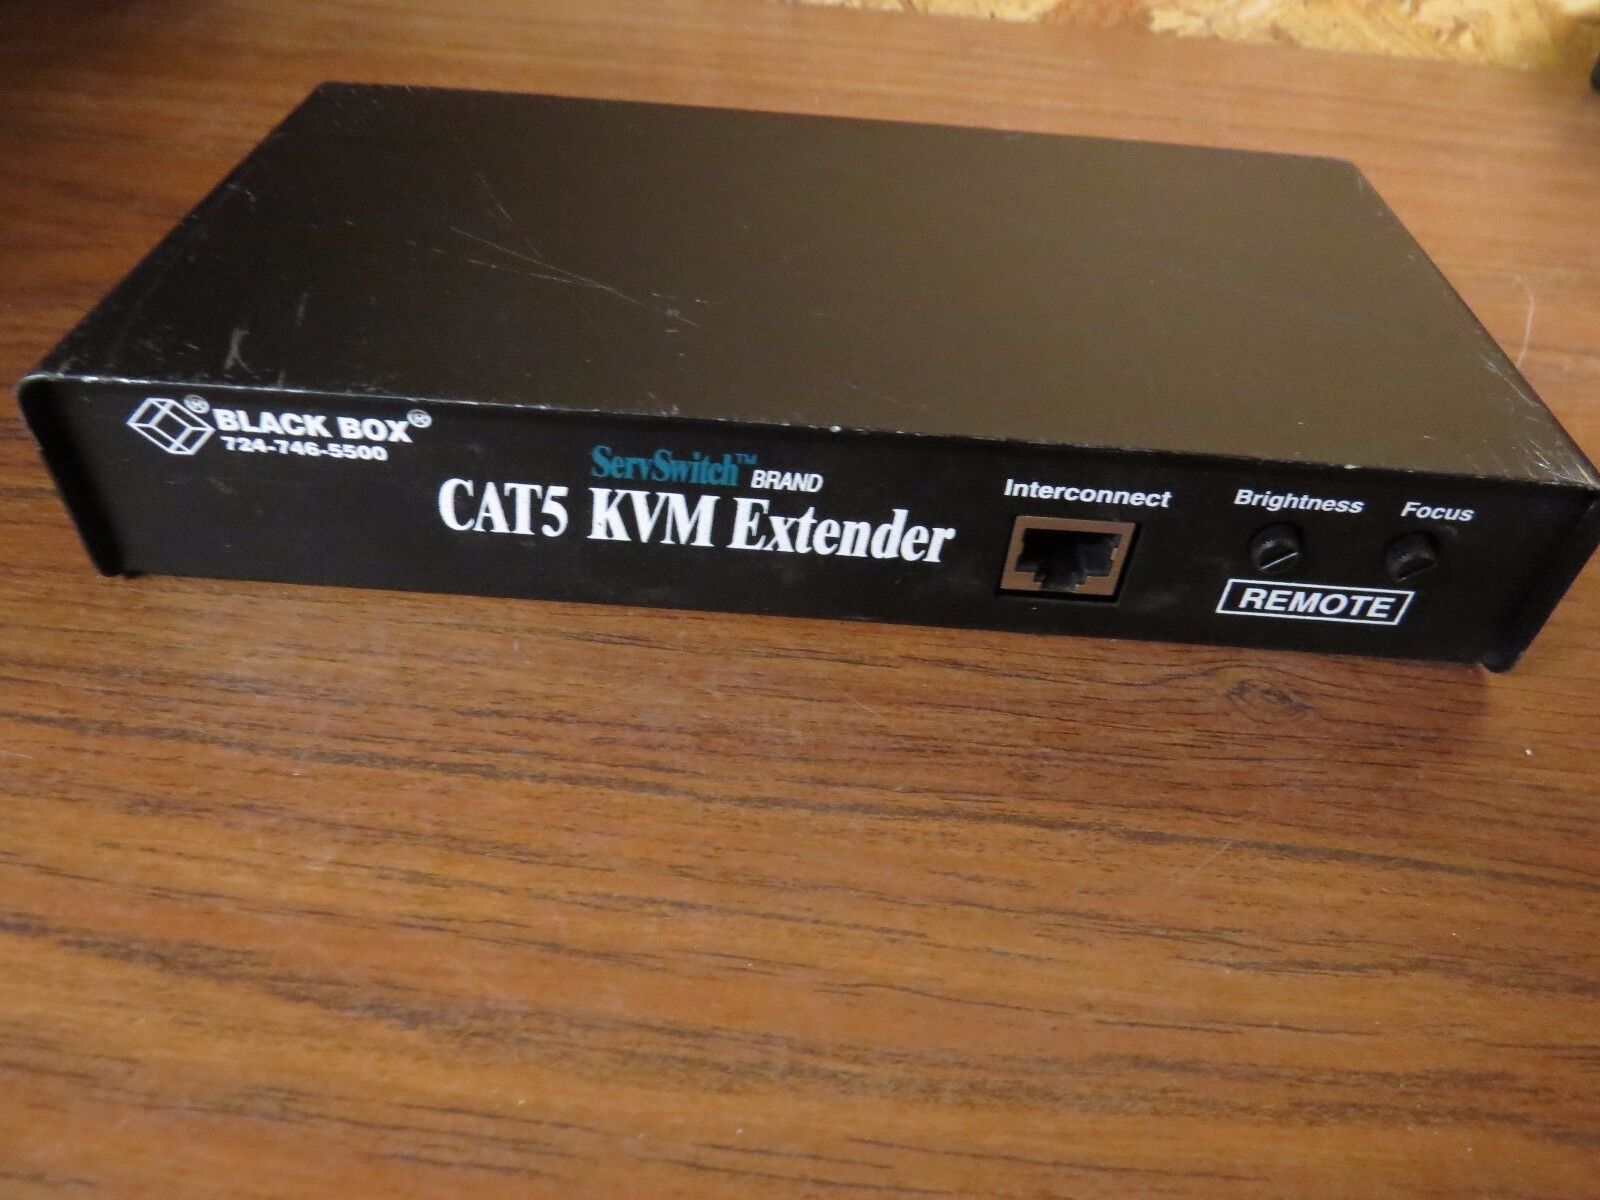 + Black Box ServSwitch CAT5 KVM Extender